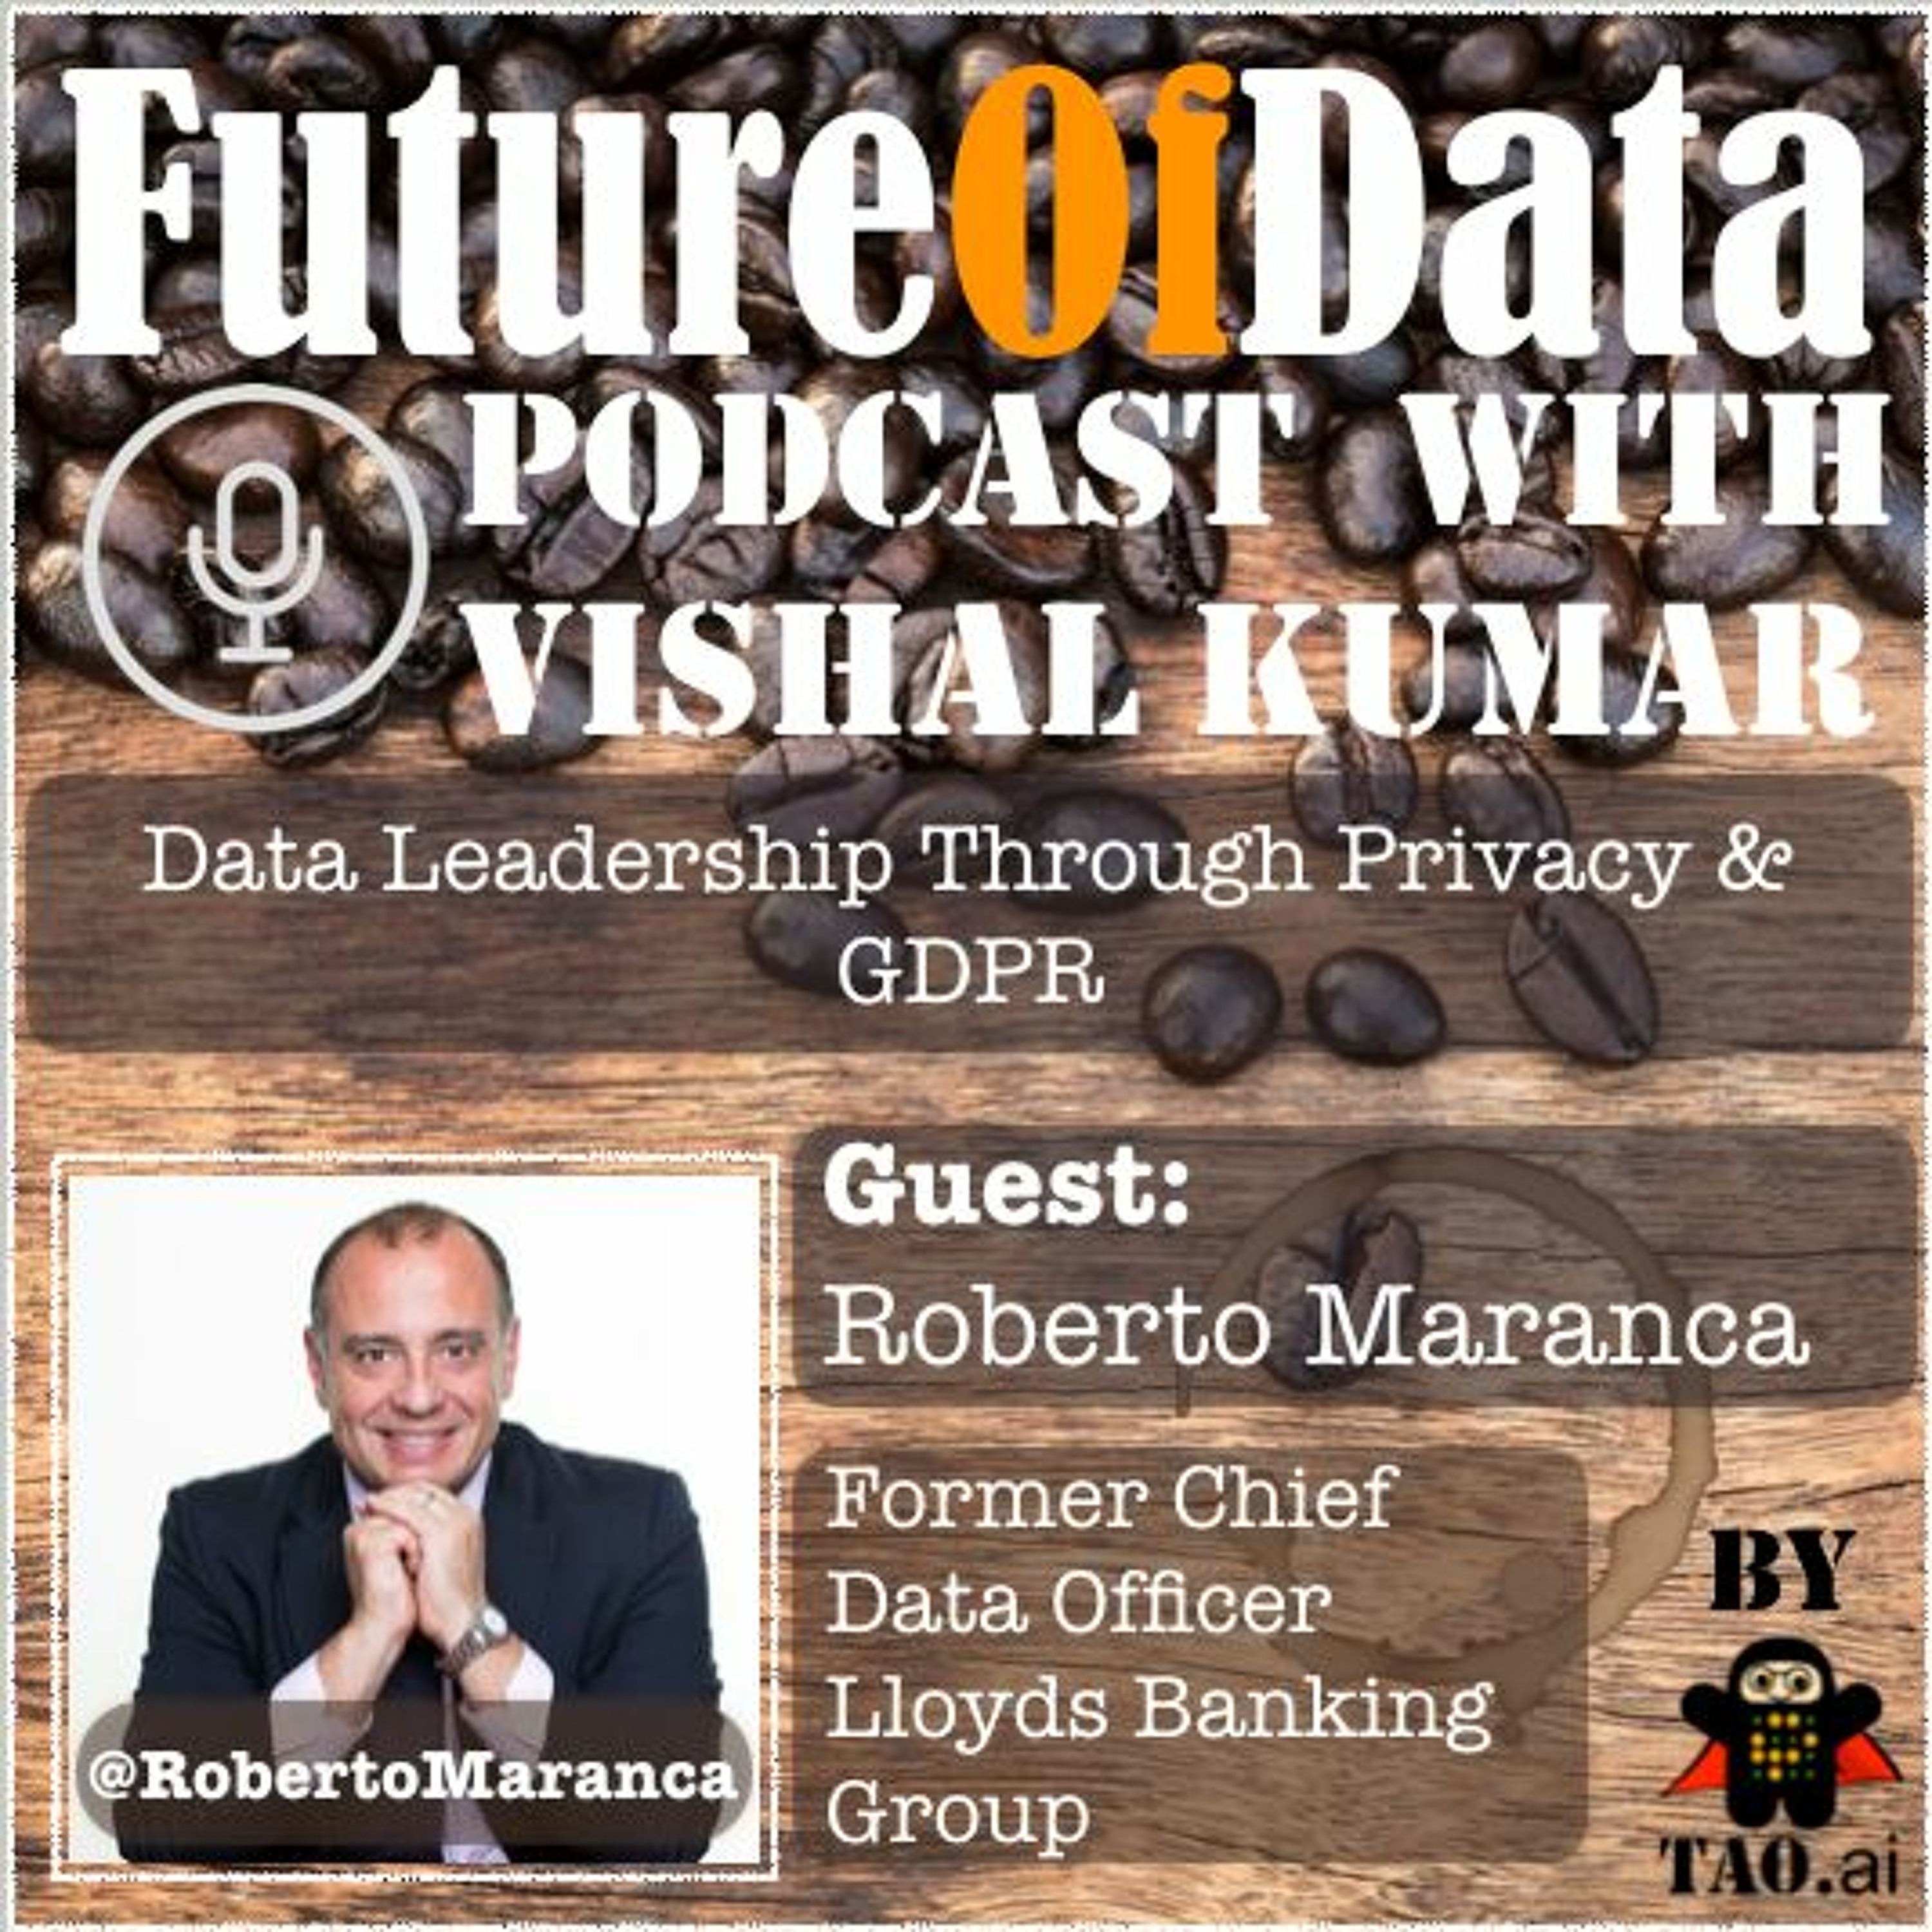 #Data #Leadership through #Privacy & #GDPR by @RobertoMaranca